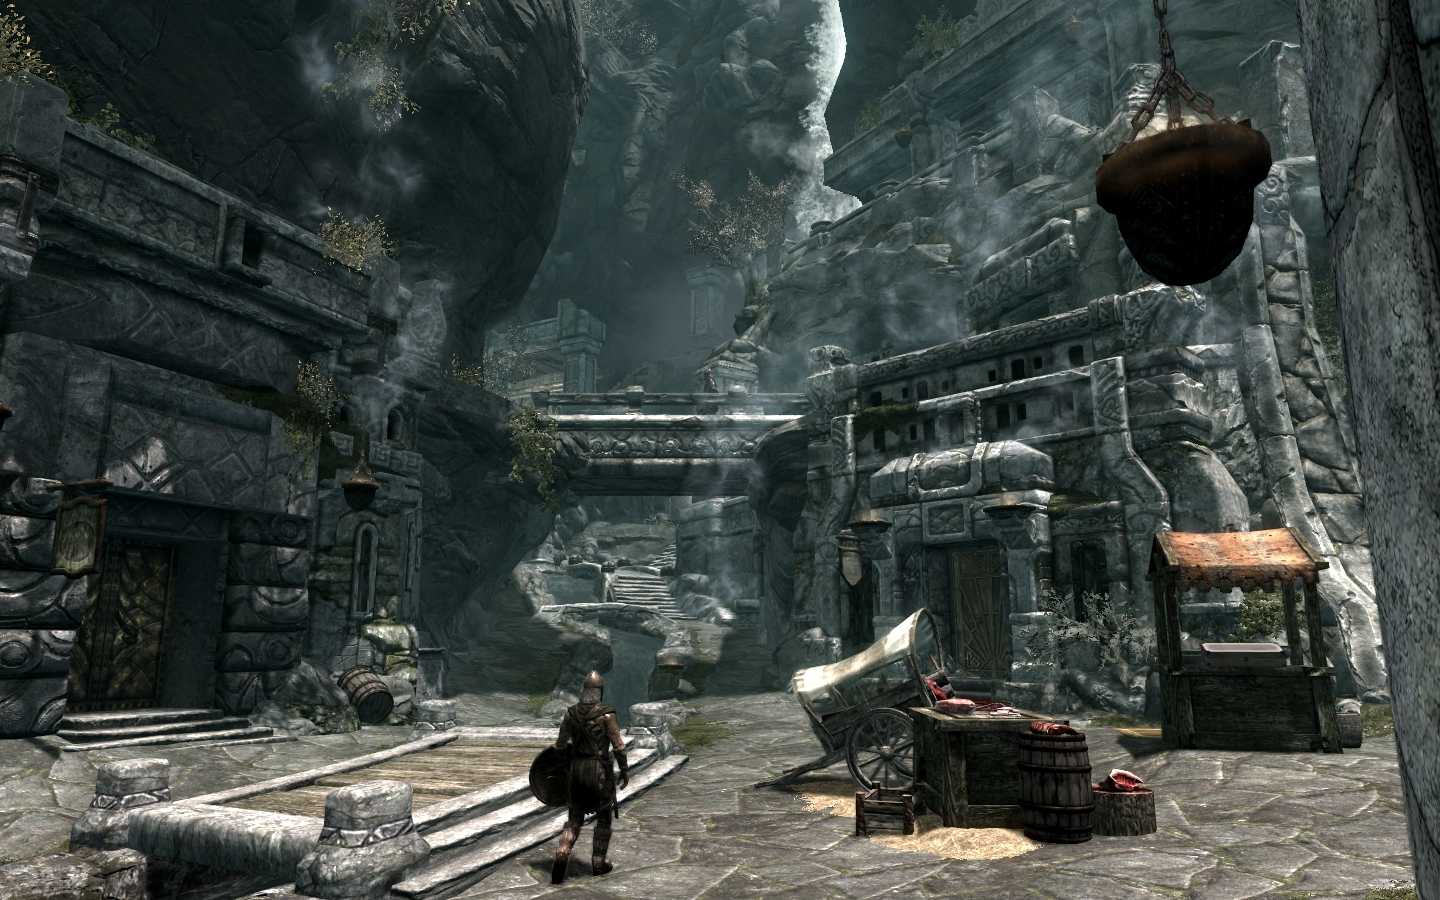 Skyrim gameplay. The Elder Scrolls v: Skyrim геймплей. Скайрим открытый мир. Города Скайрима. Скайрим мир.